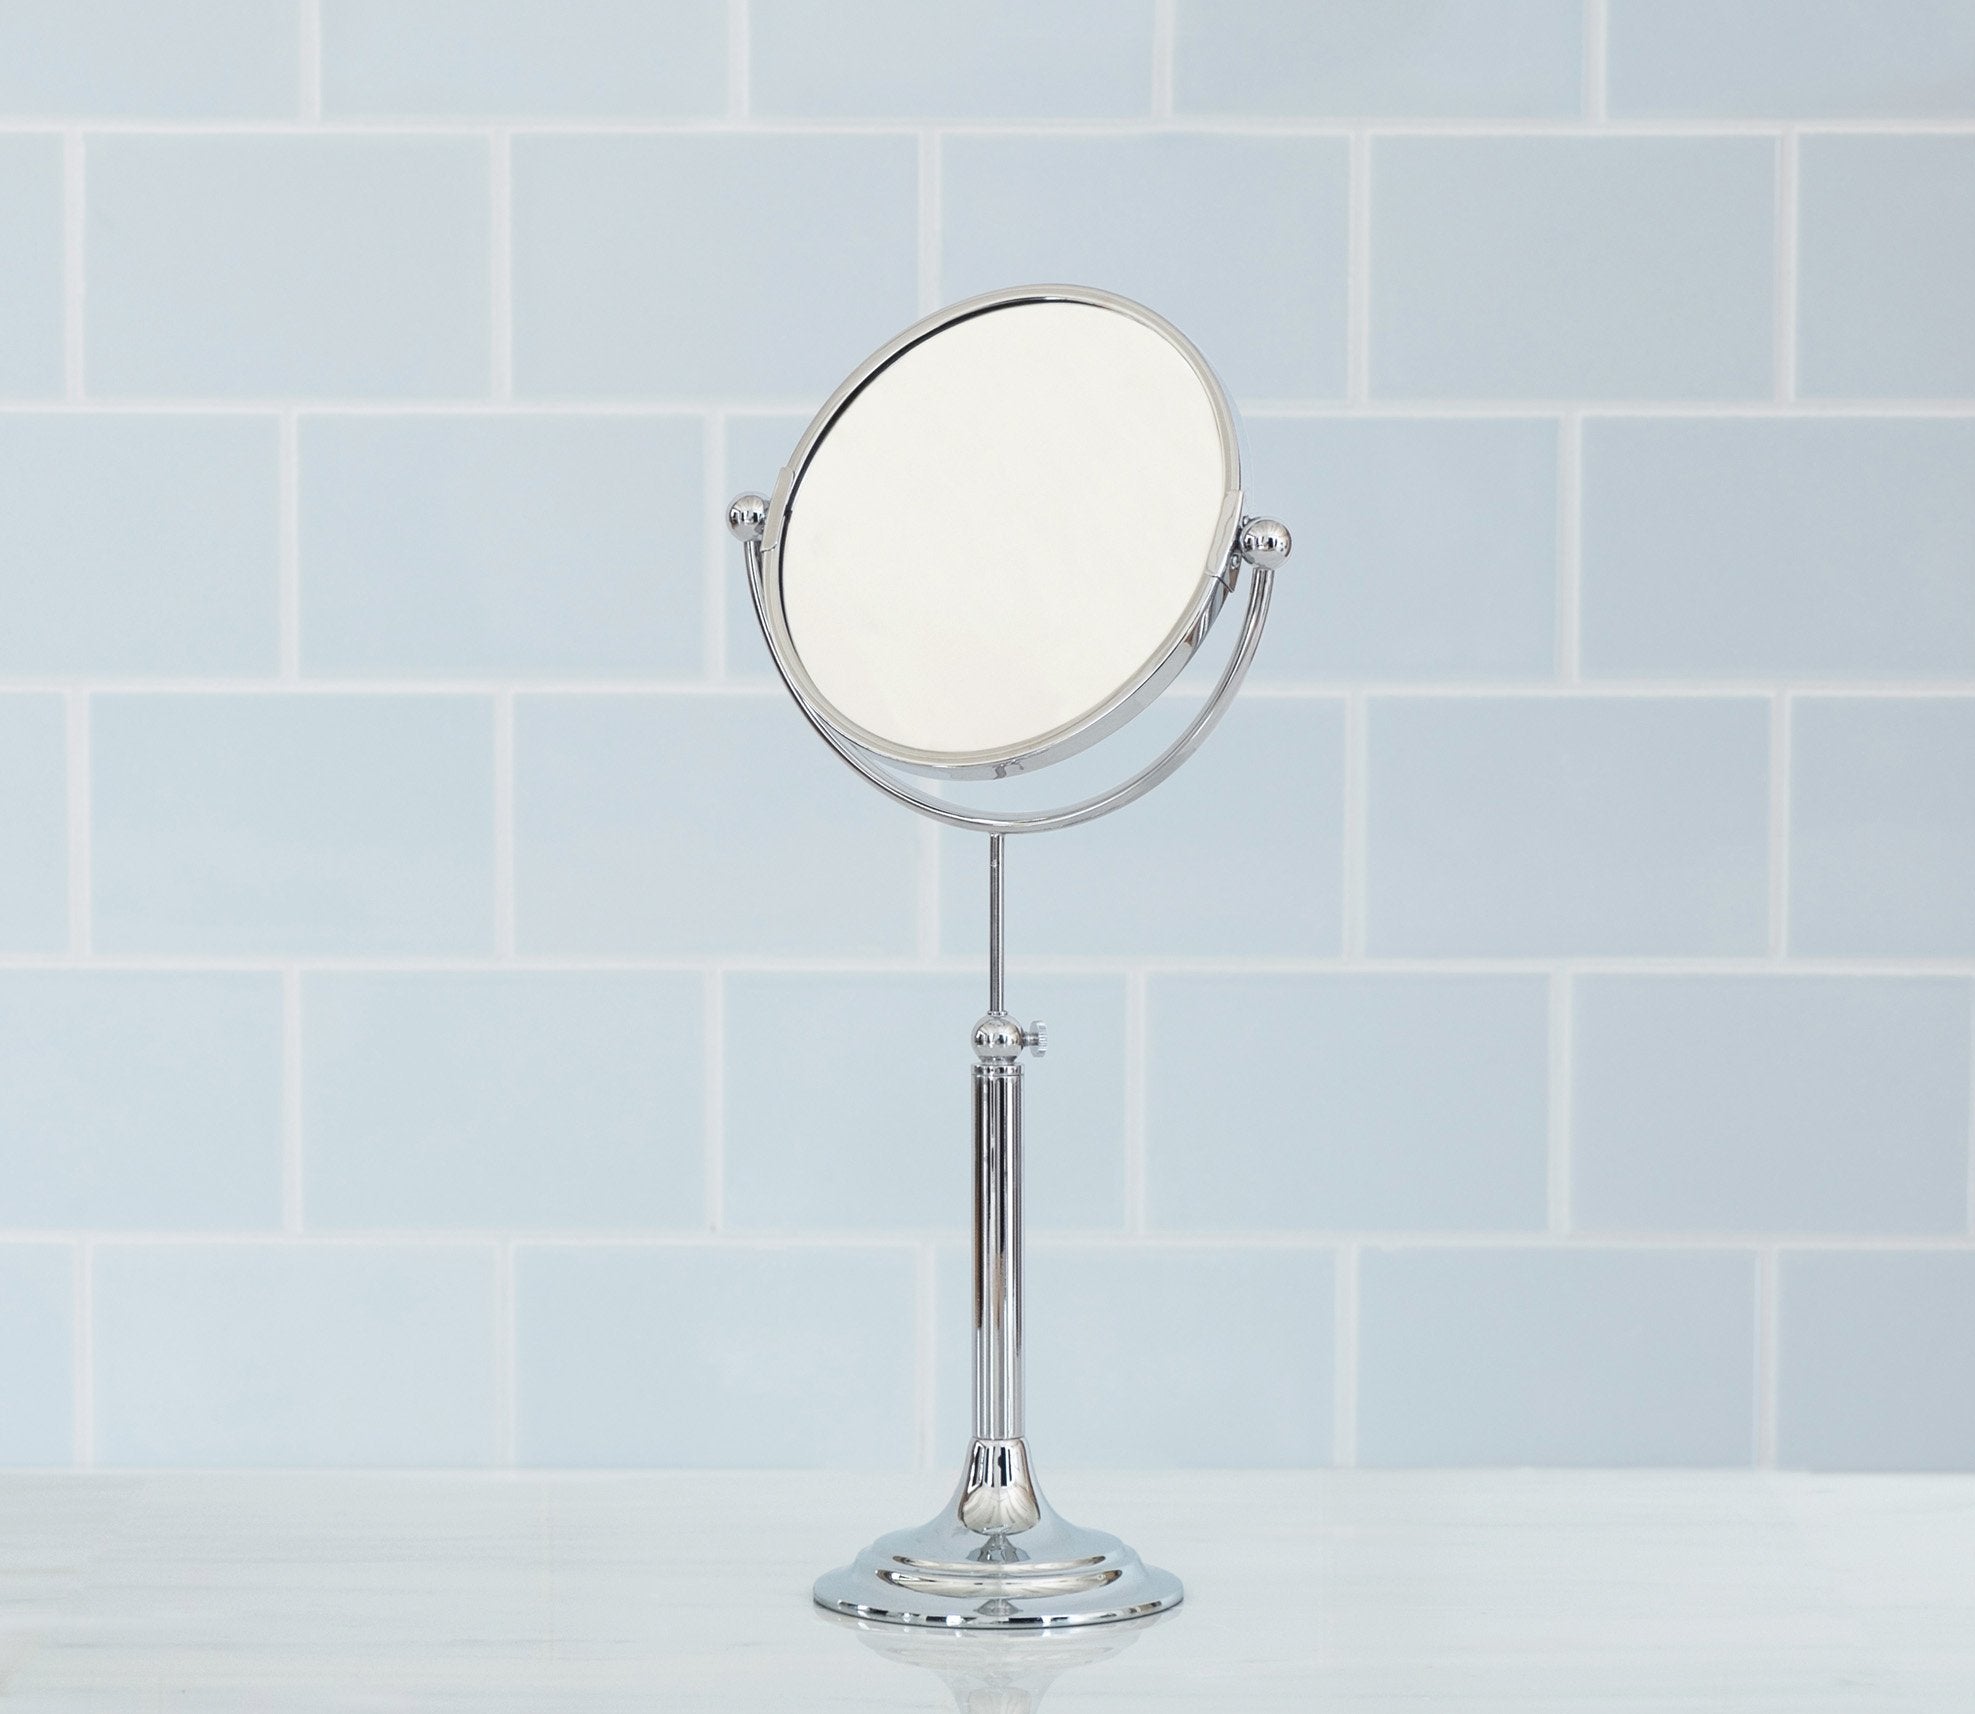 Make Up Mirror Large Product Image 1